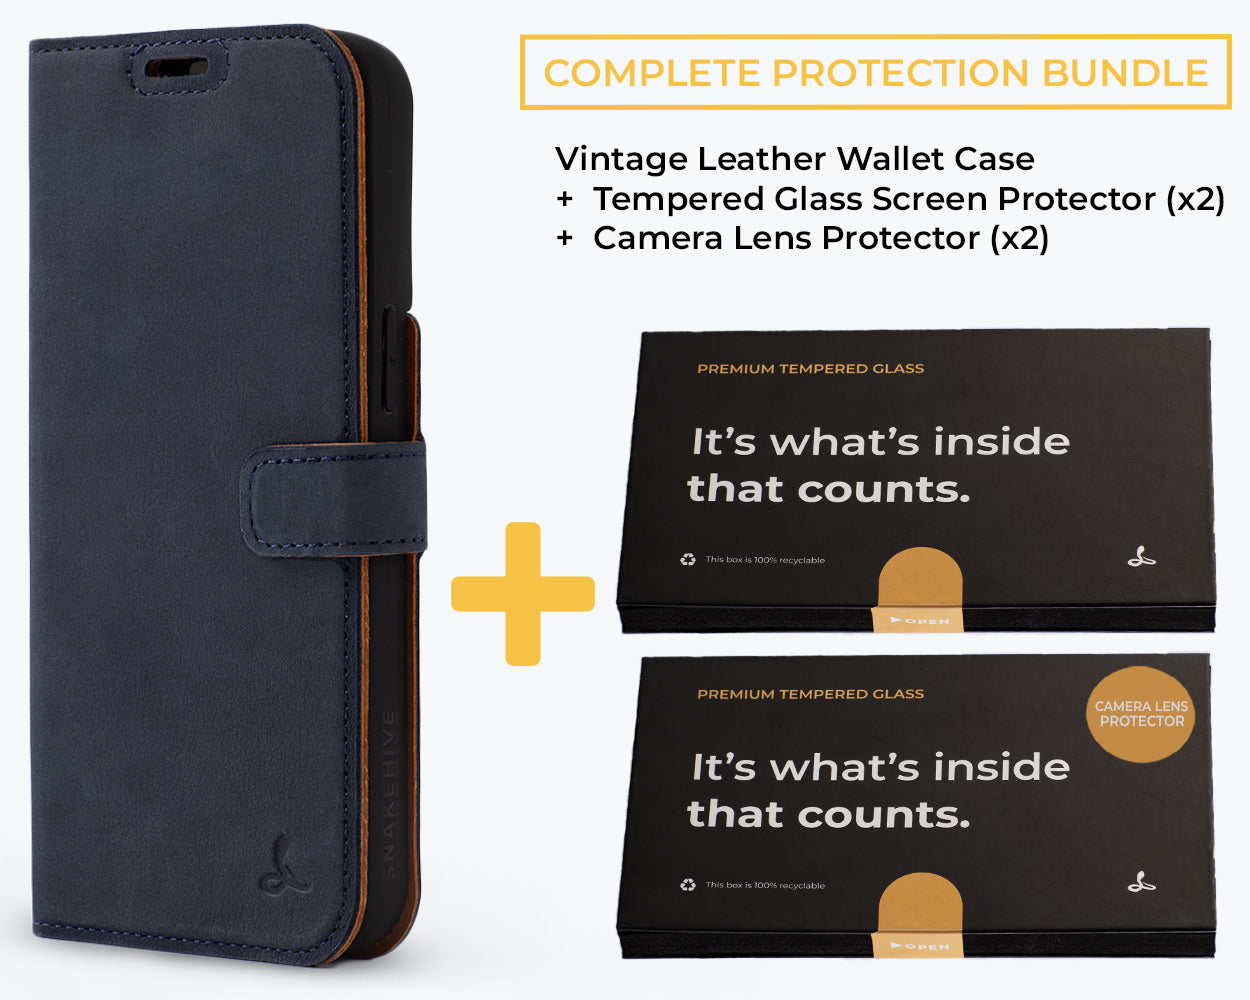 Complete Protection Bundle (Vintage Wallet) - Apple iPhone 12